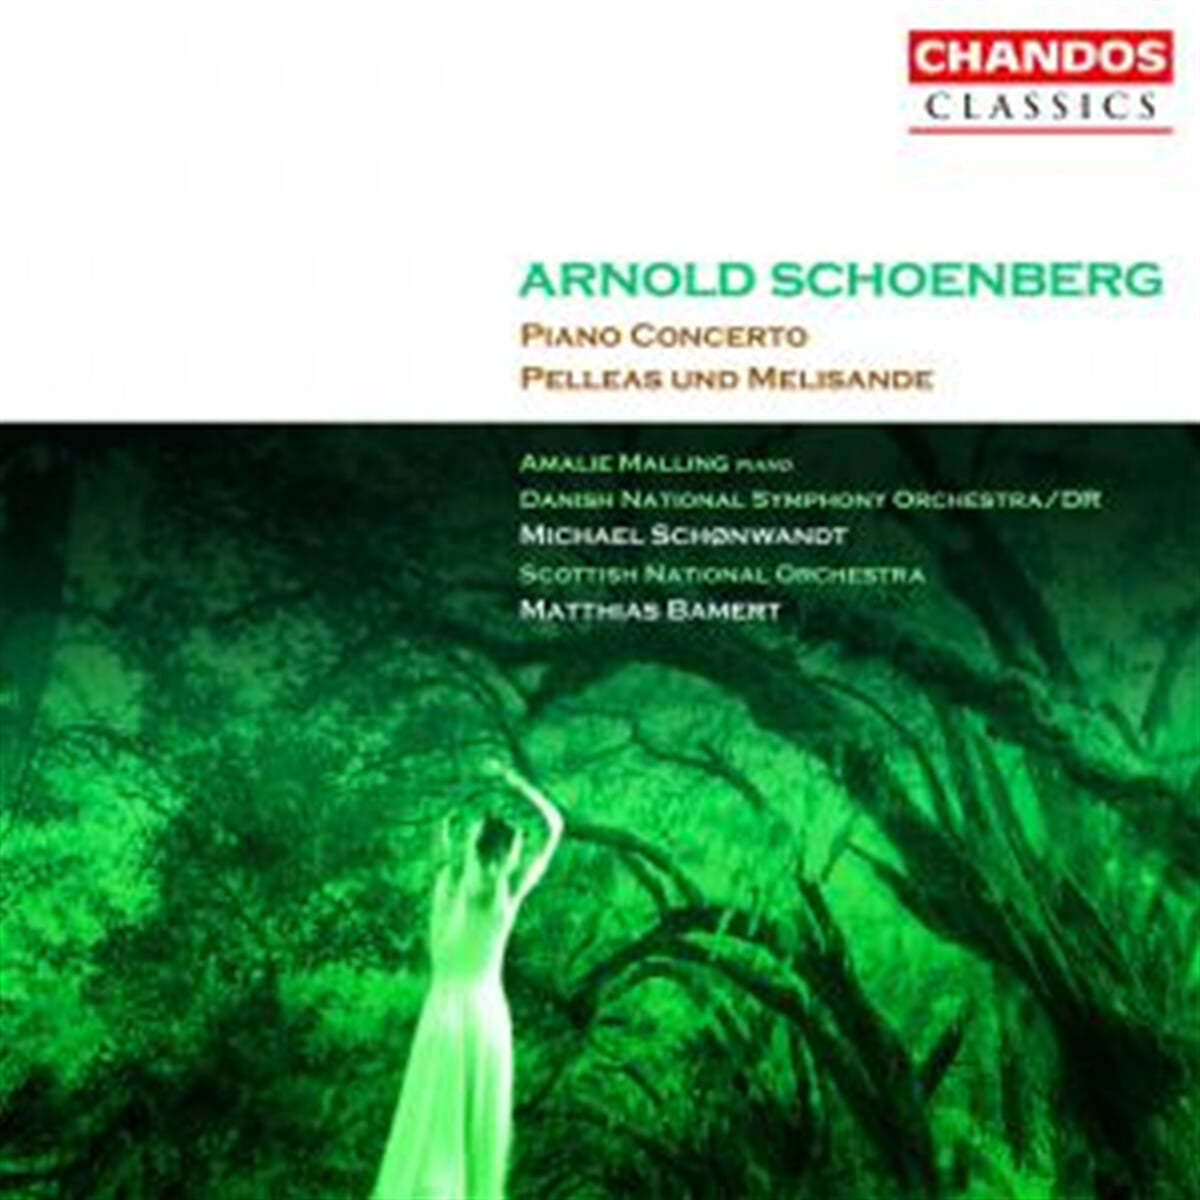 Michael Schonwandt 쇤베르크: 펠레아스와 멜리장드, 피아노 협주곡 (Schoenberg: Pelleas und Melisande, Piano Concerto) 